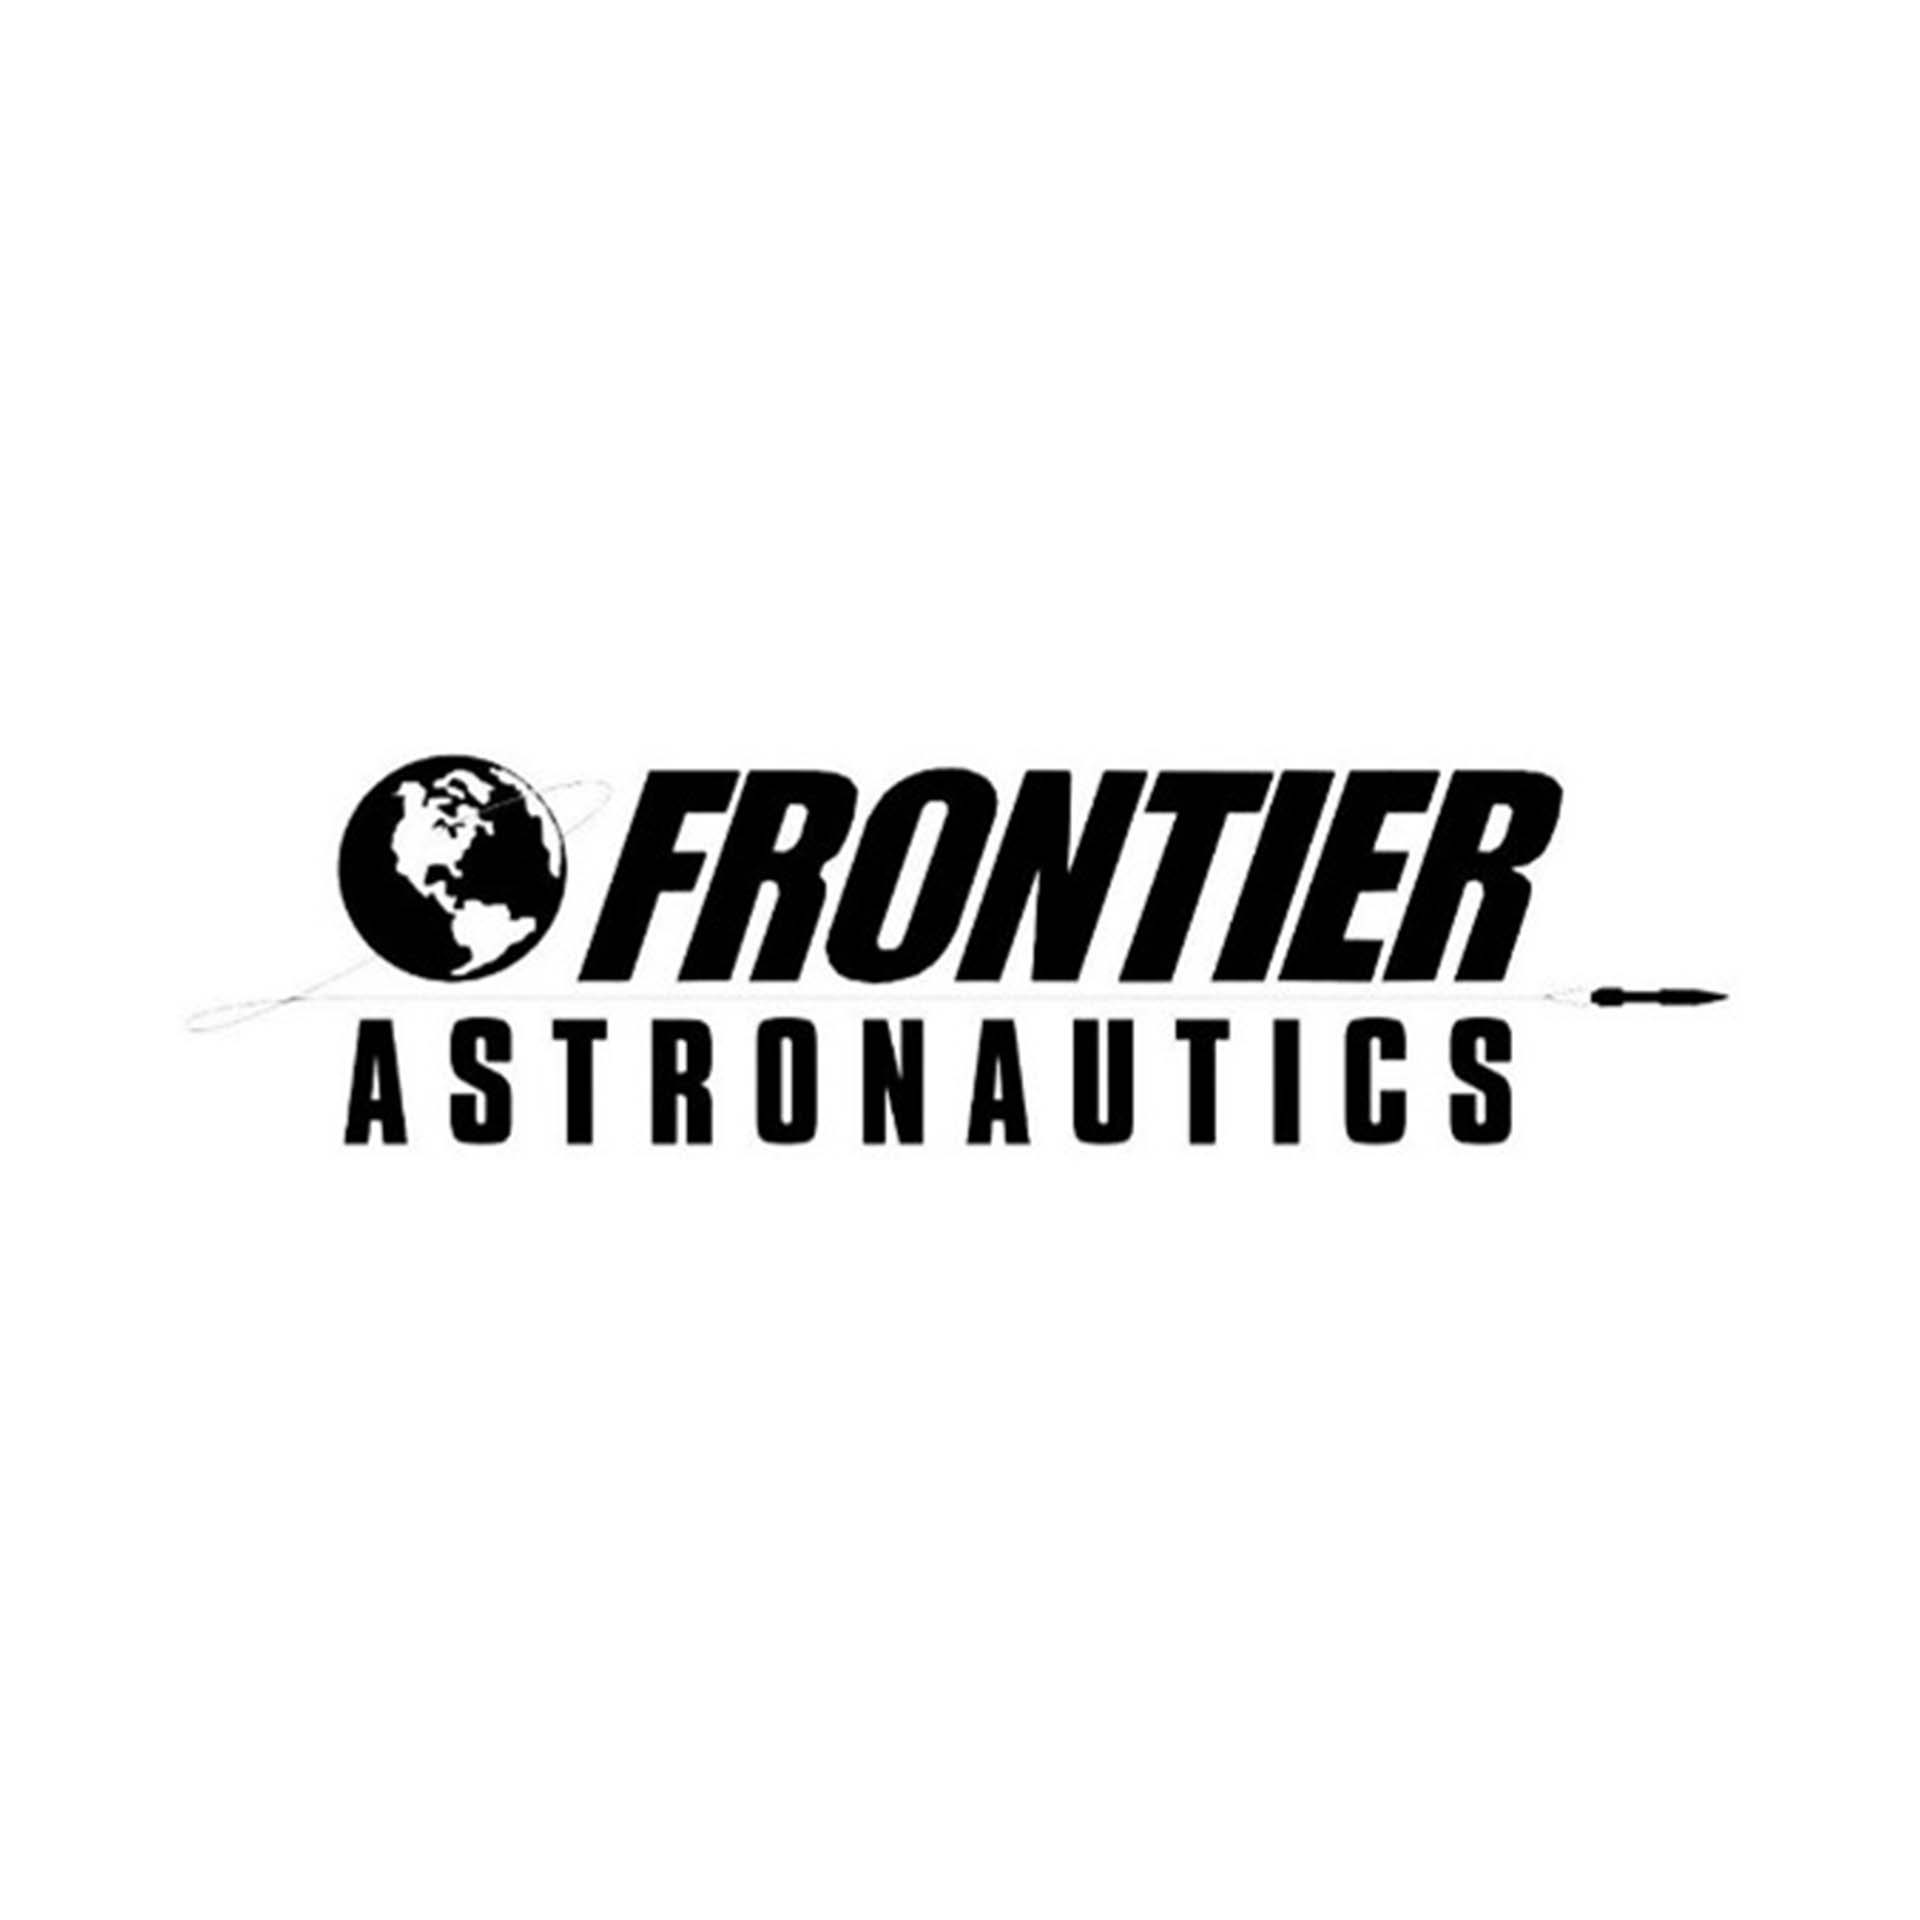 Frontier Astronautics